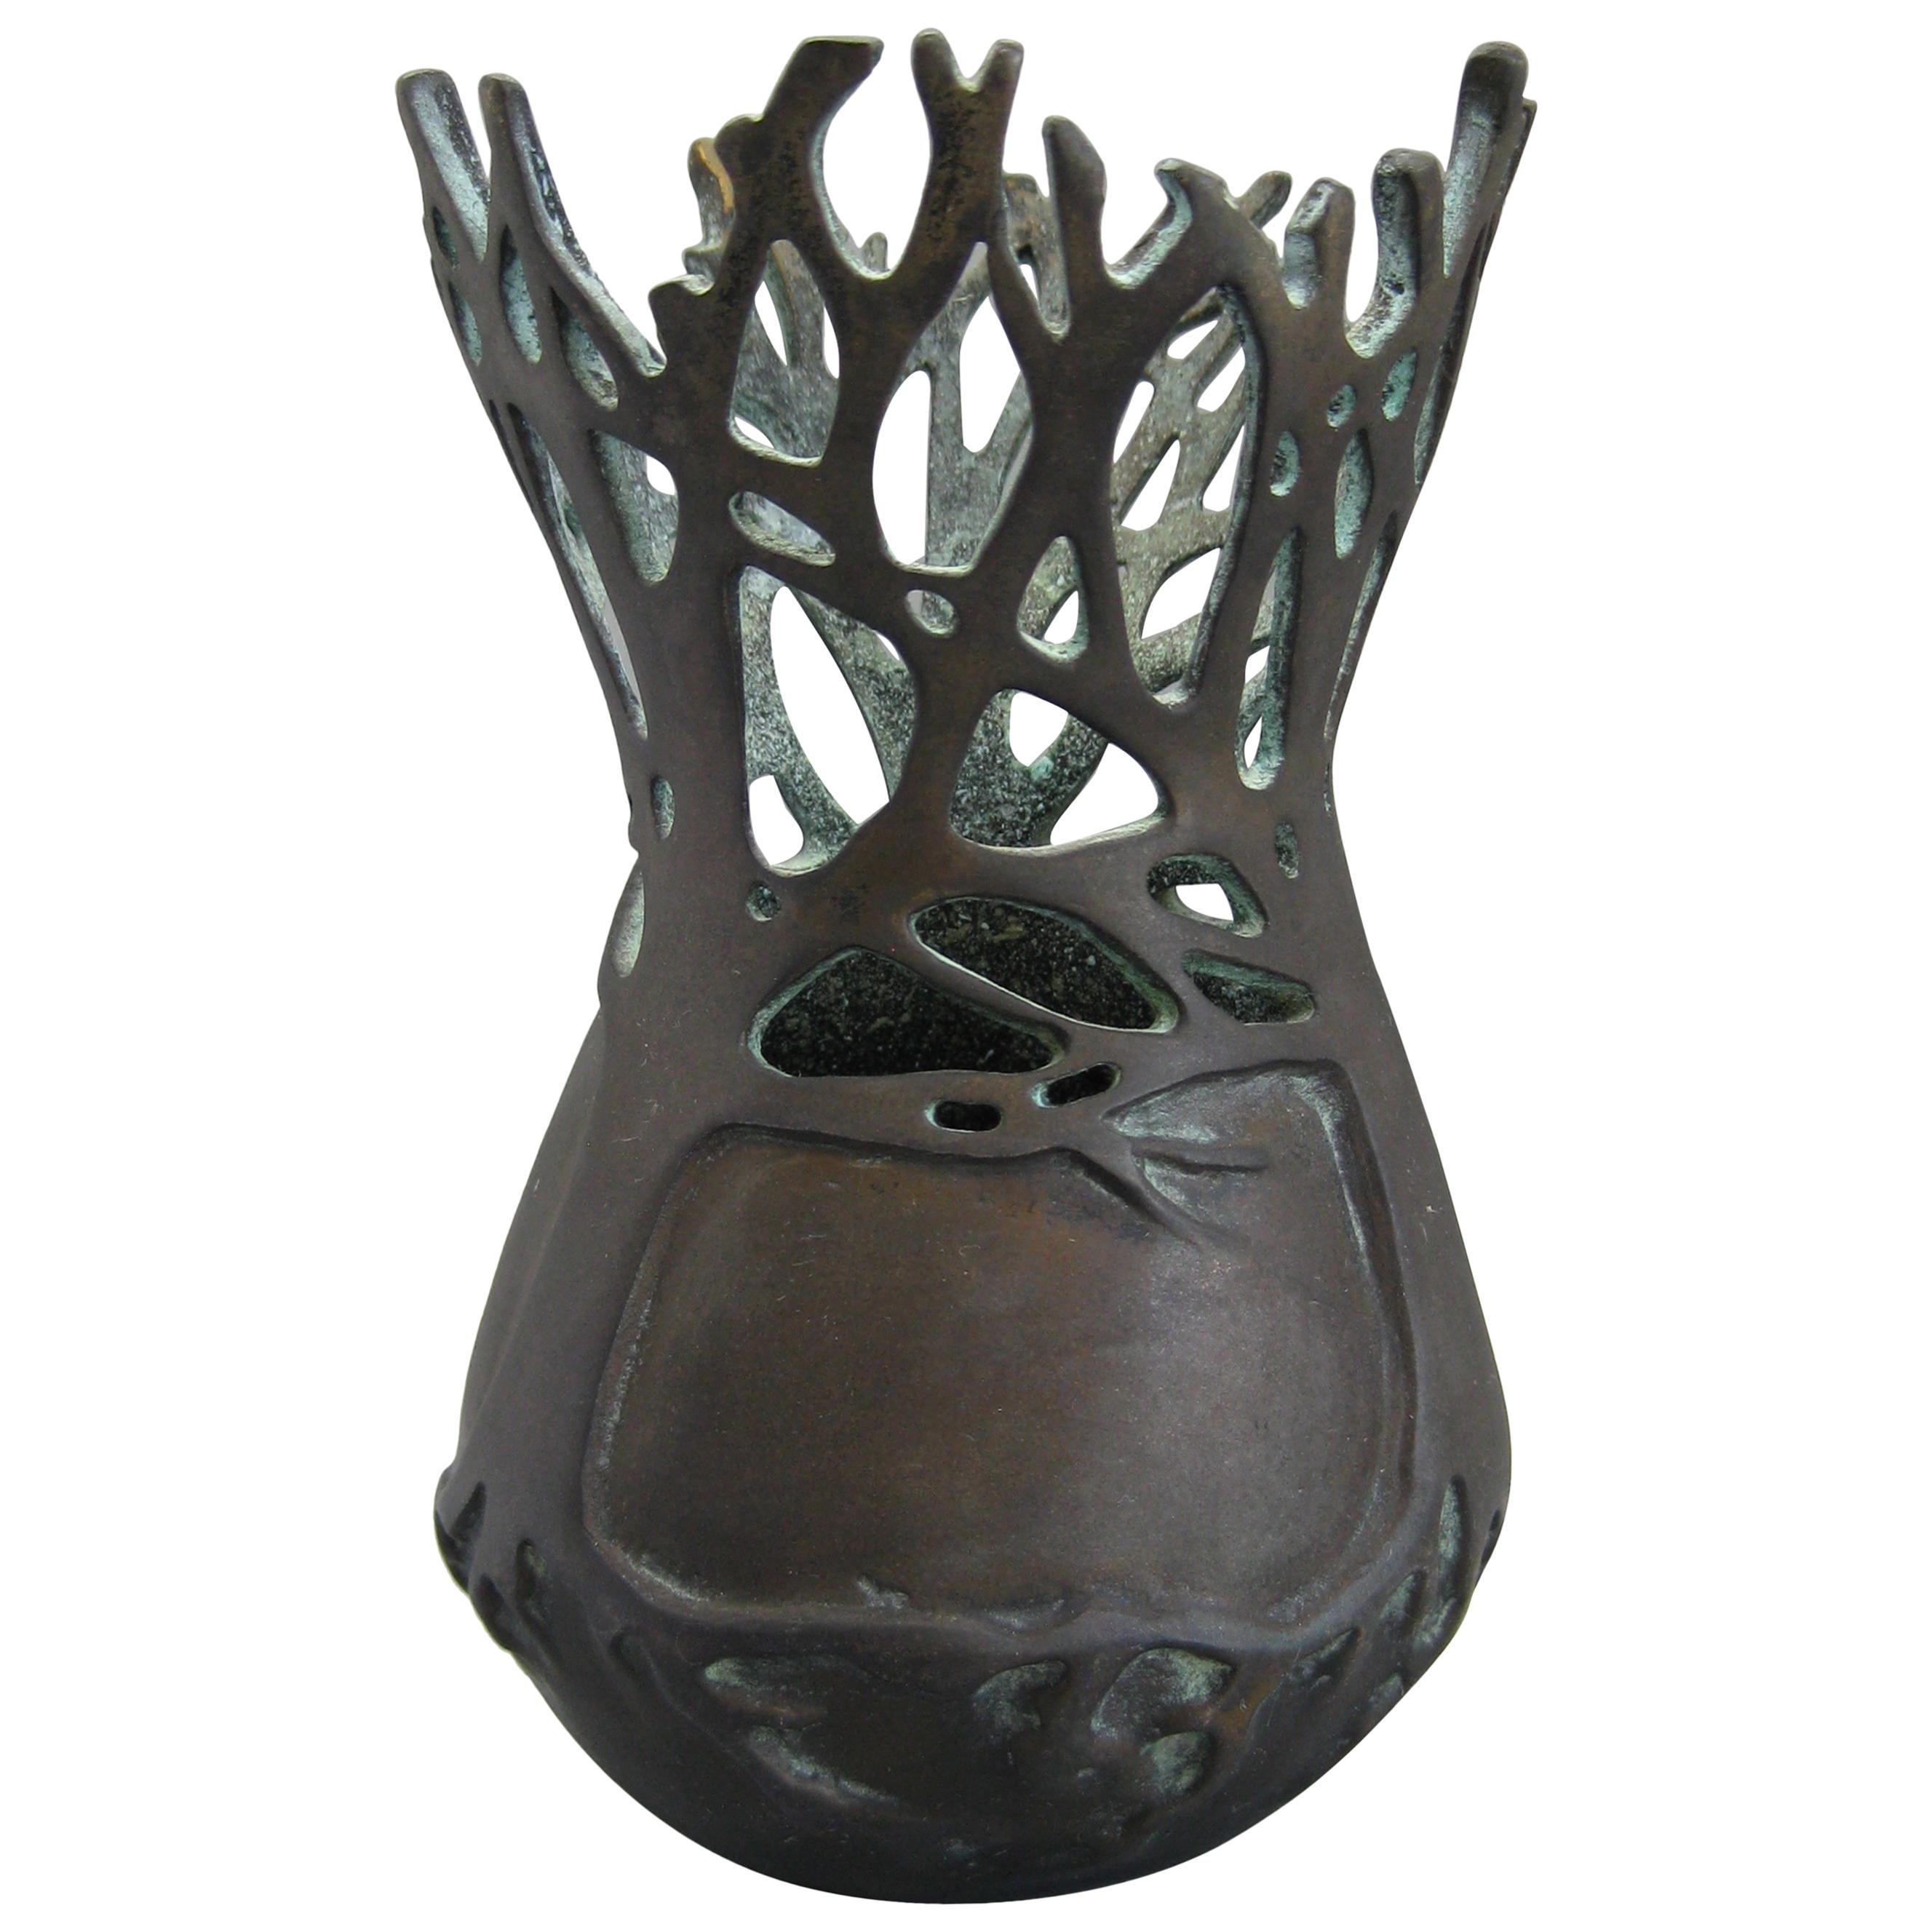 2001 Carol Alleman Organic Midcentury Bronze Vase Vessel Sculpture Limited 75